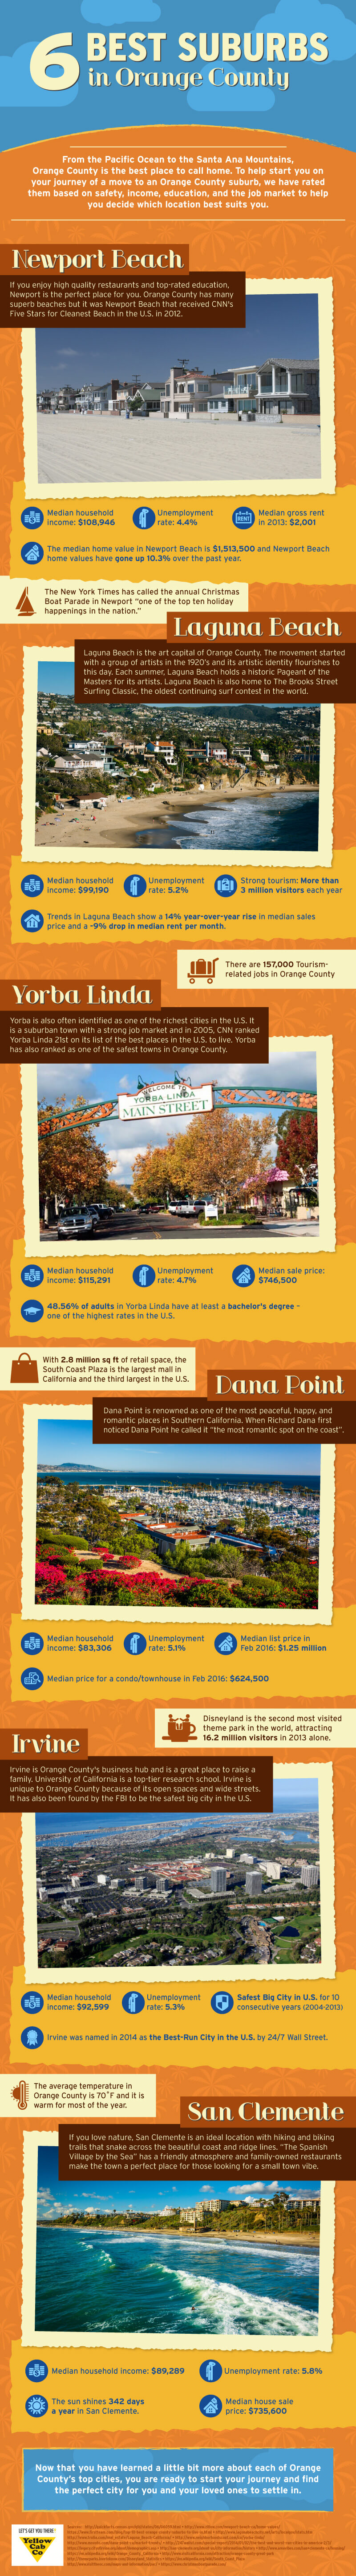 6-best-suburbs-in-orange-county-infographic-plaza